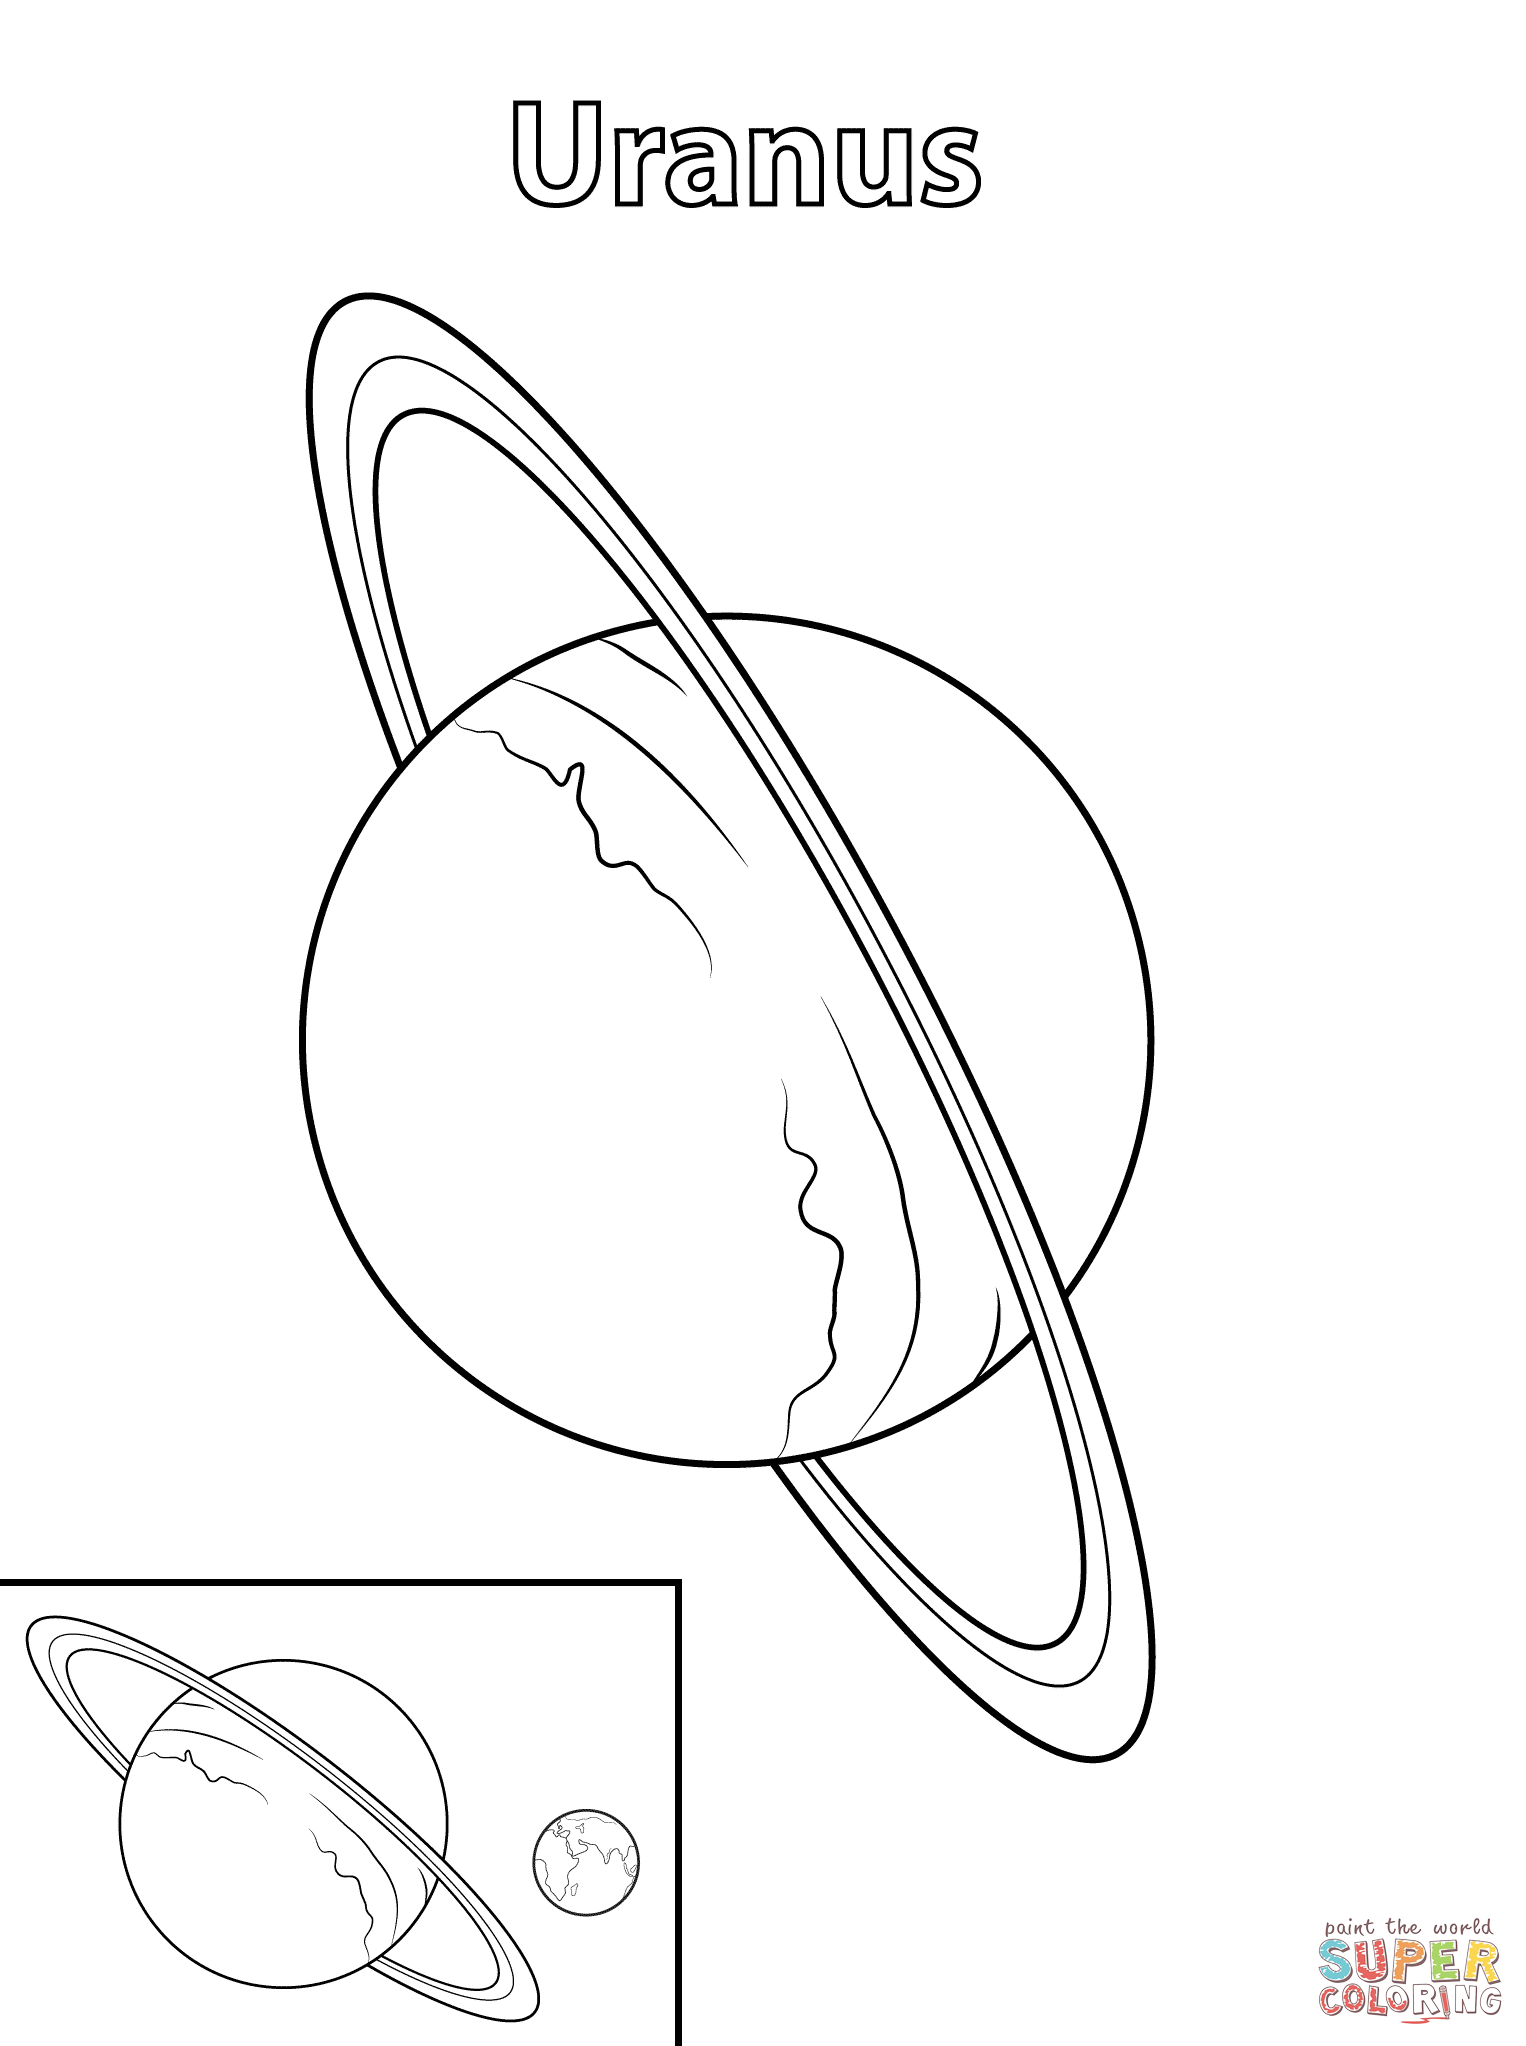 Uranus Planet coloring page